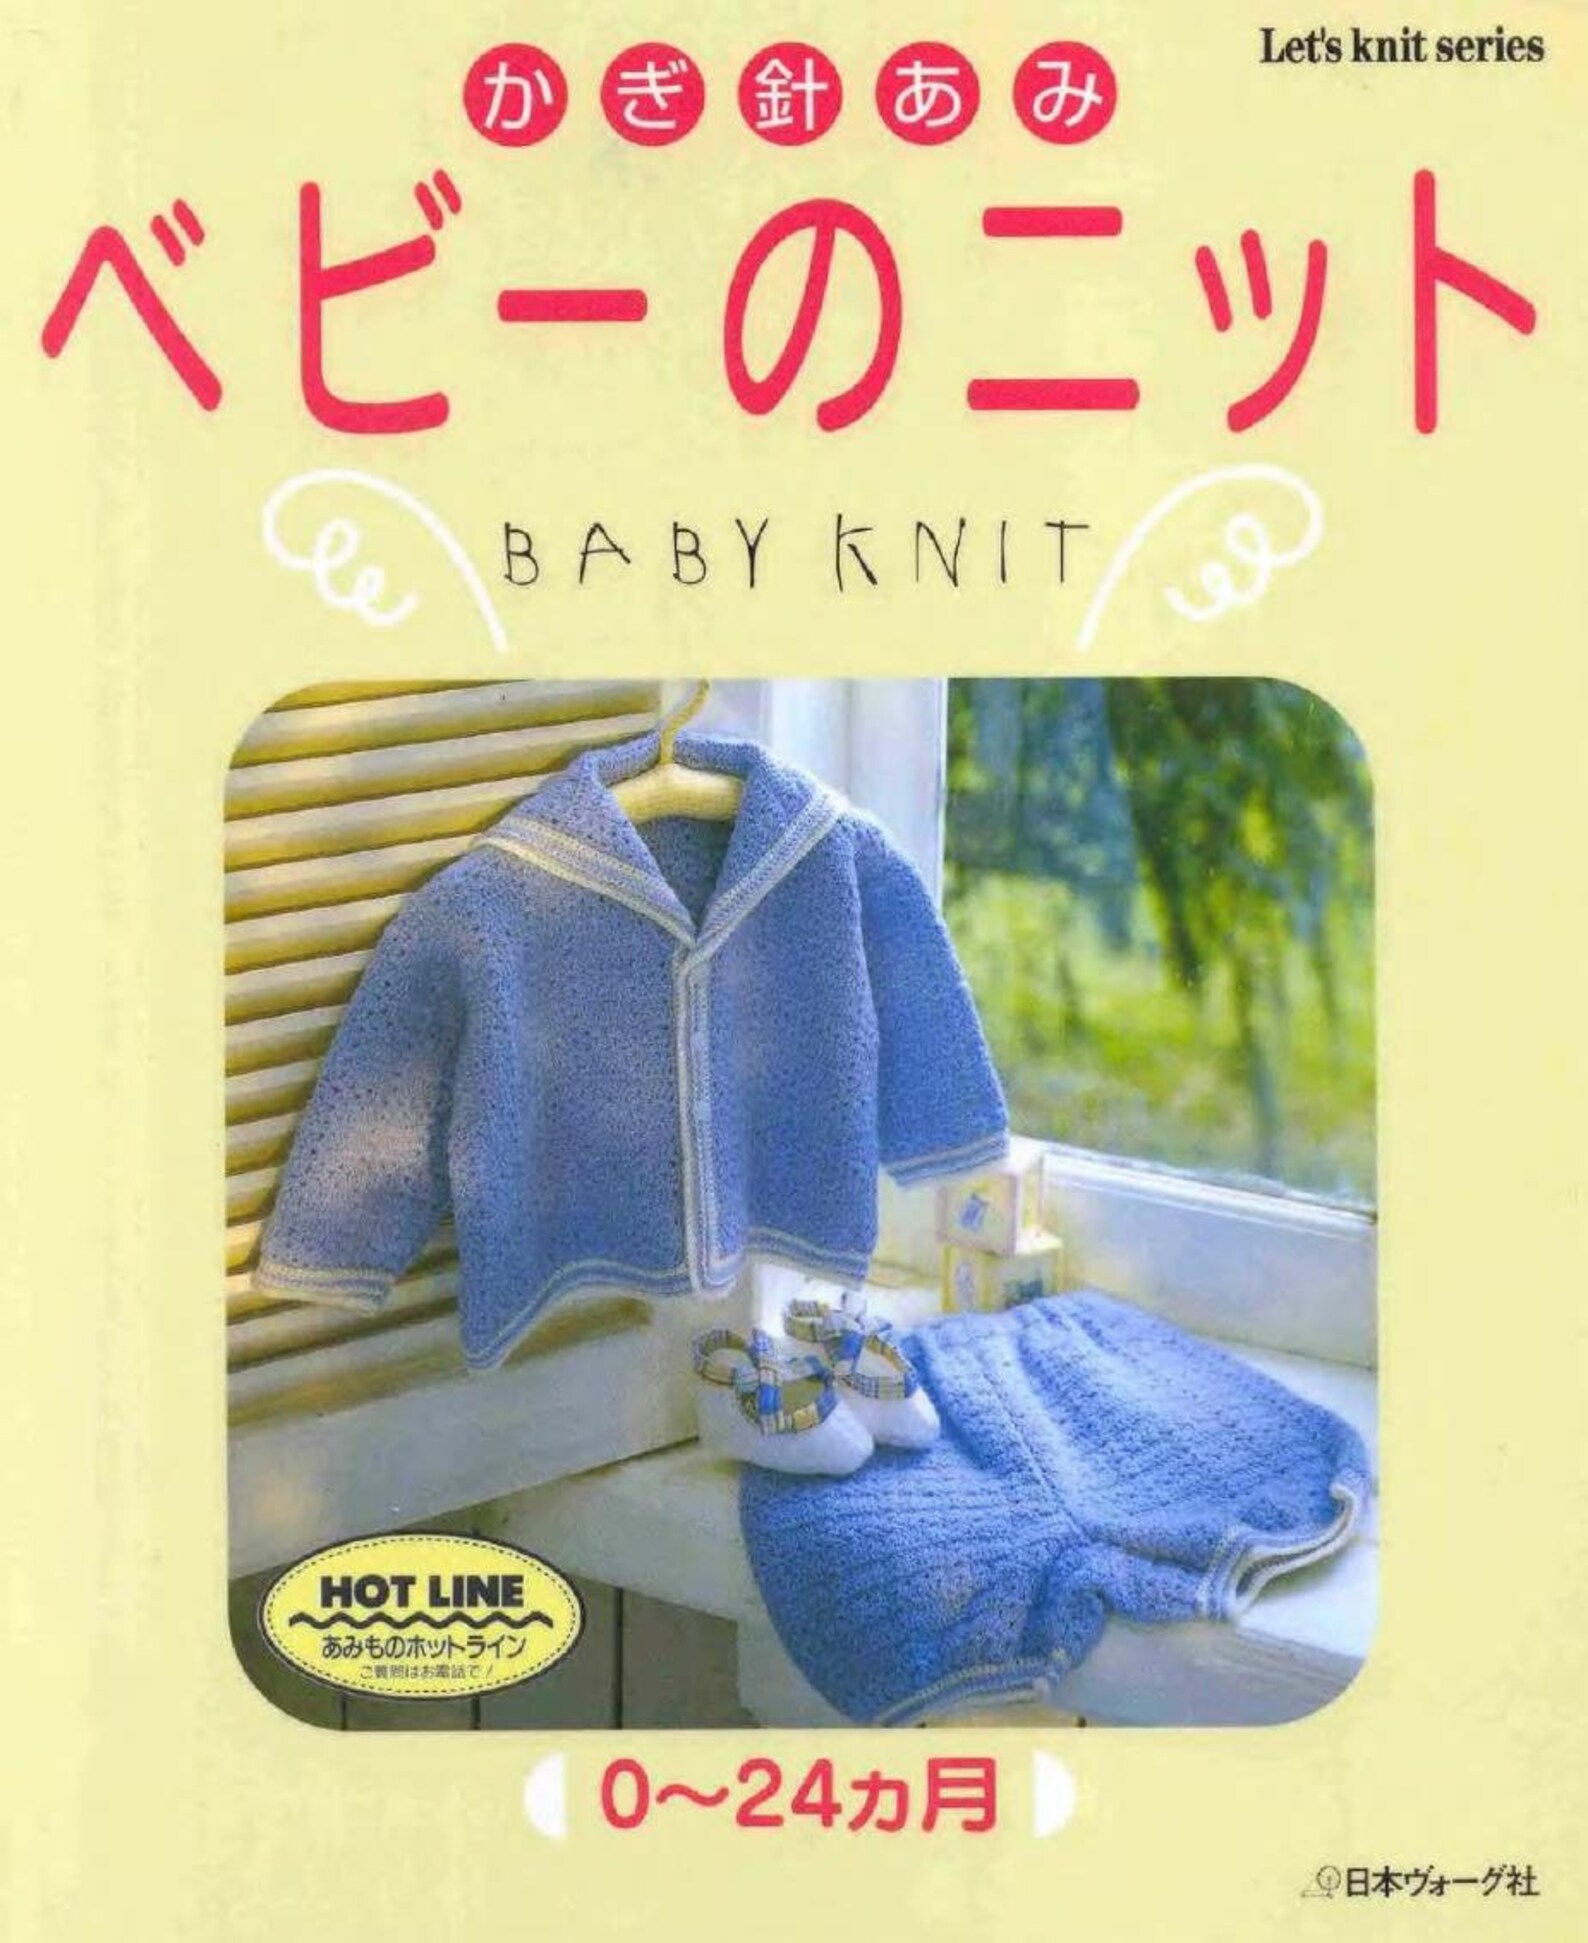 Lets 00. Let's Knit Series детям. Японские детские журналы по вязанию. Китайские журналы по вязанию для детей. Журнал китайский вязание для детей.